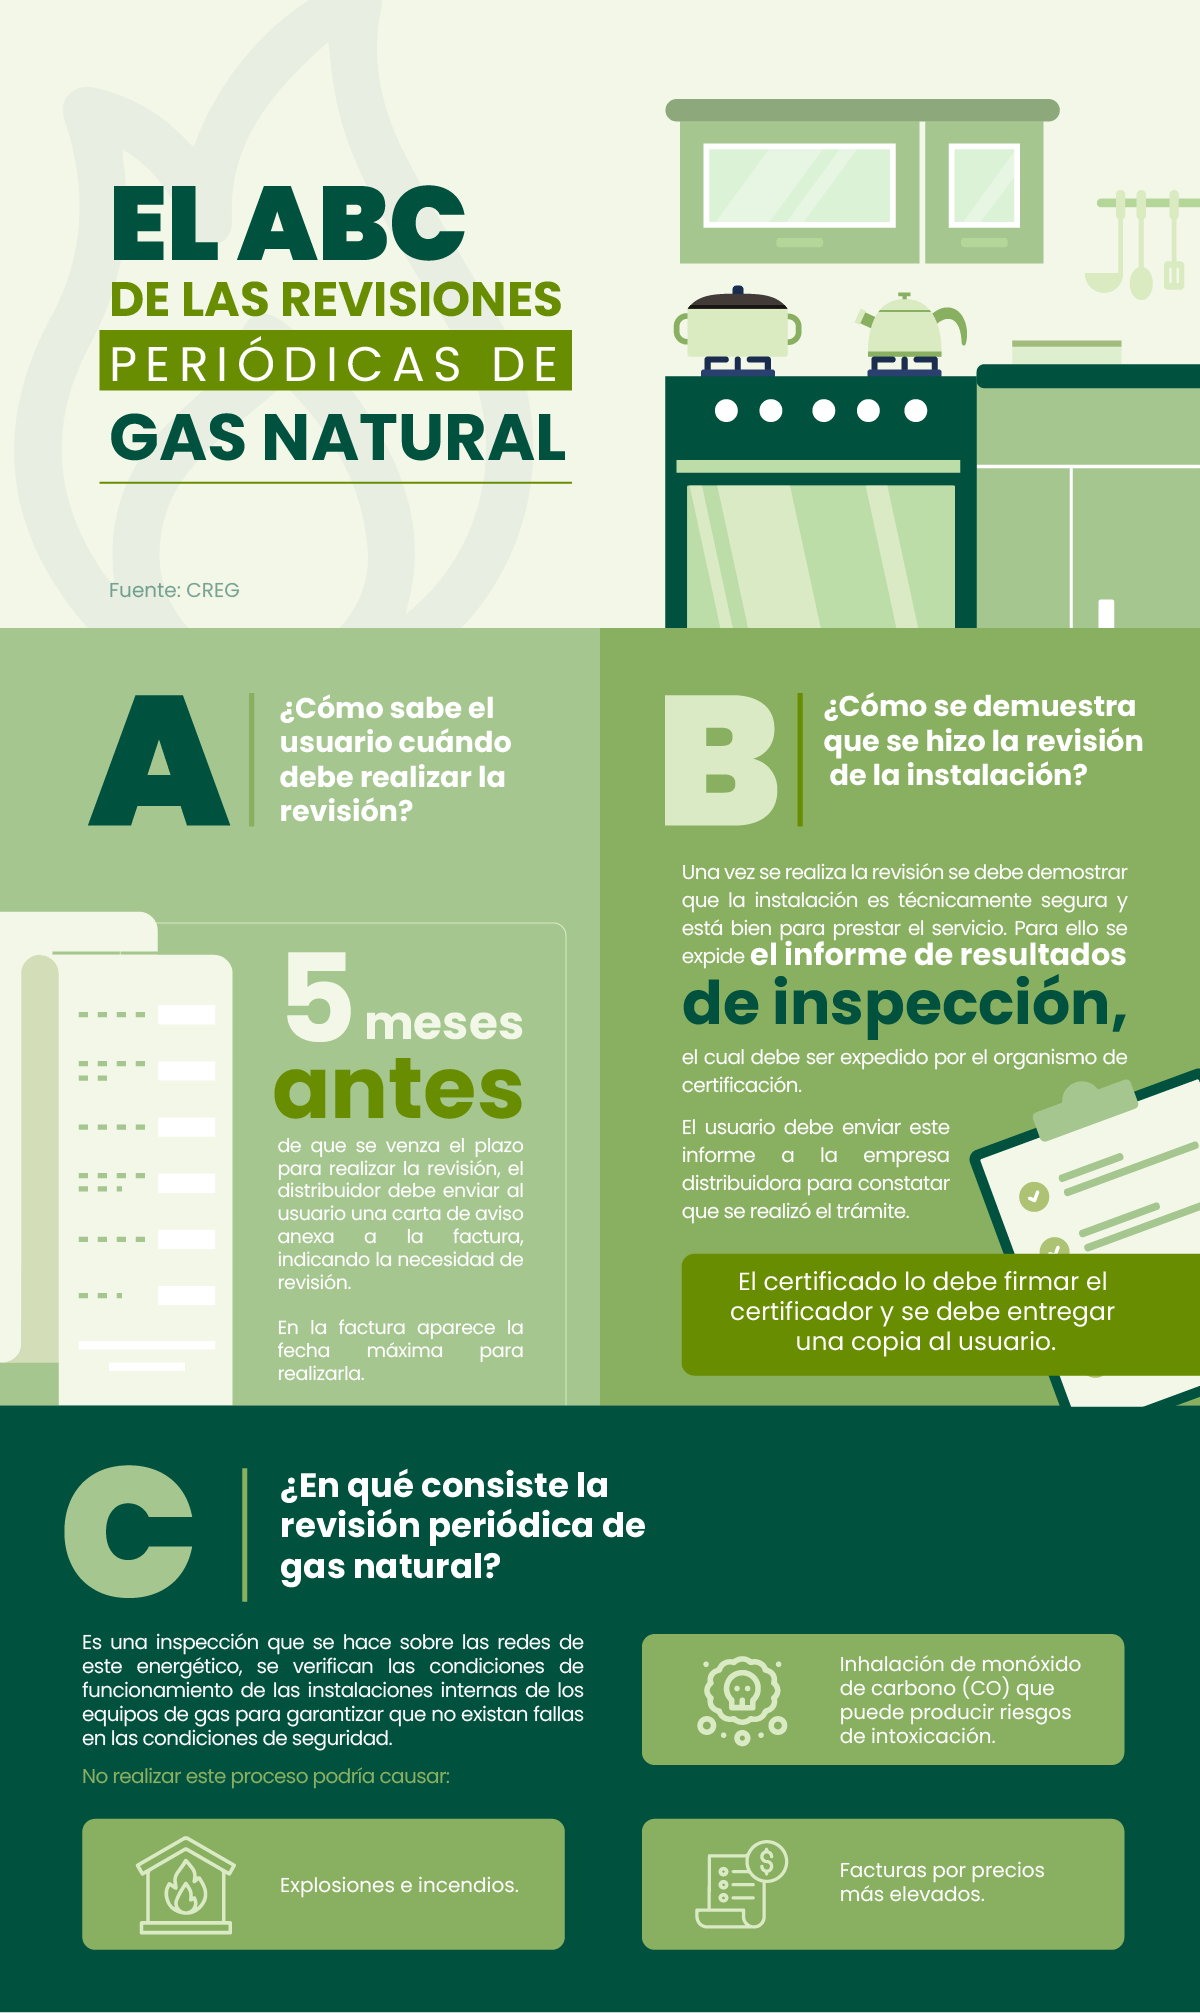 Naturgas